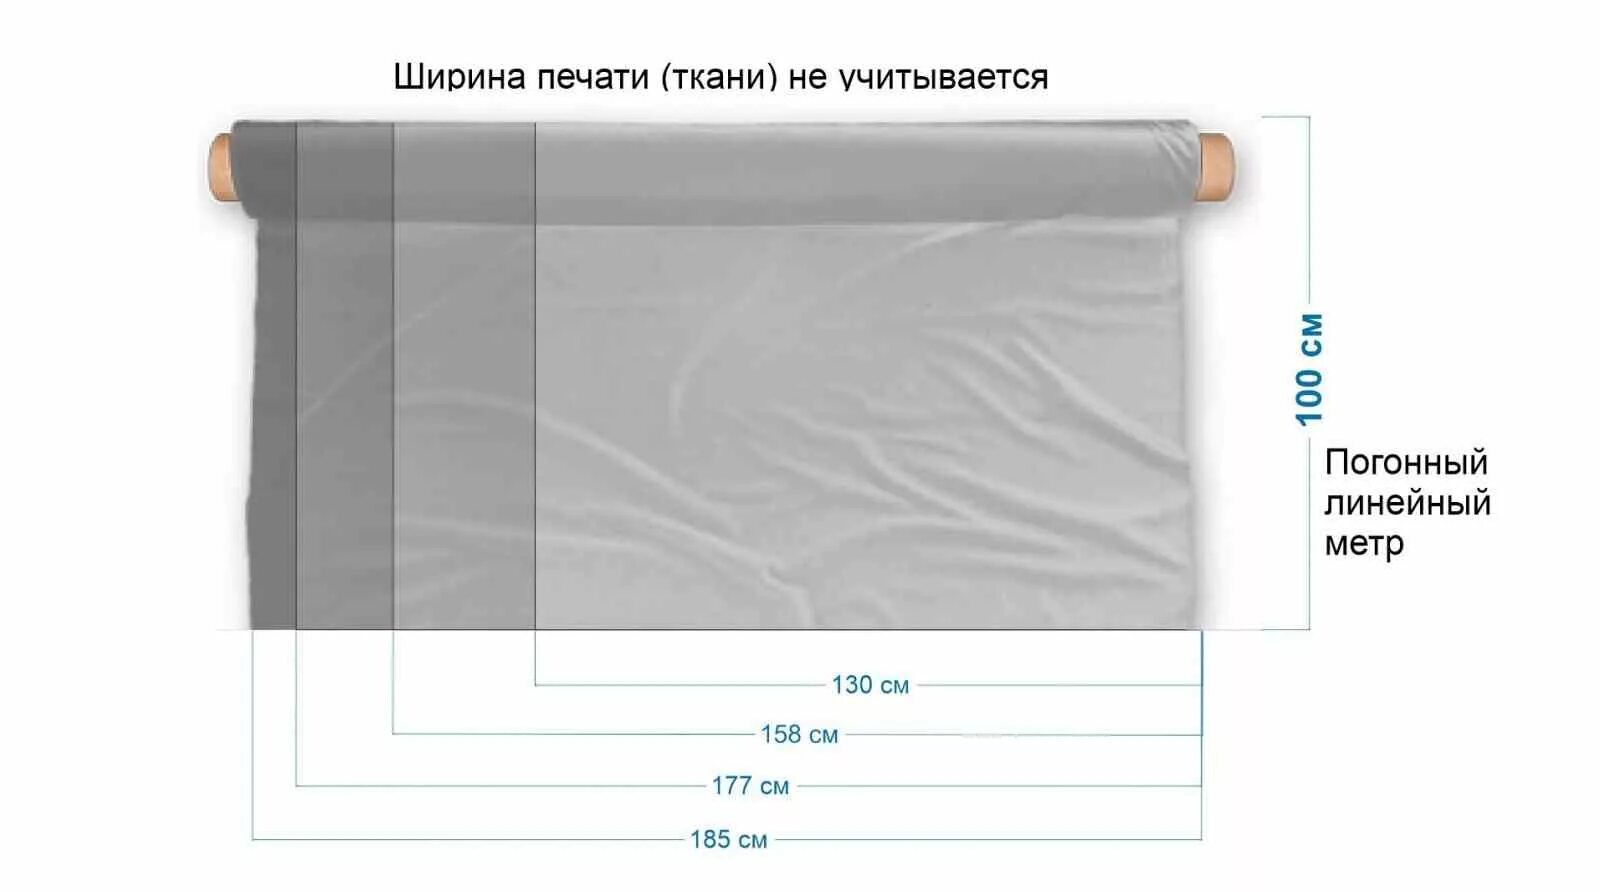 1 метр ткани 0. Погонный метр. Погонный метр ткани. 1 Погонный метр ткани. Погонный метр ткани материал.